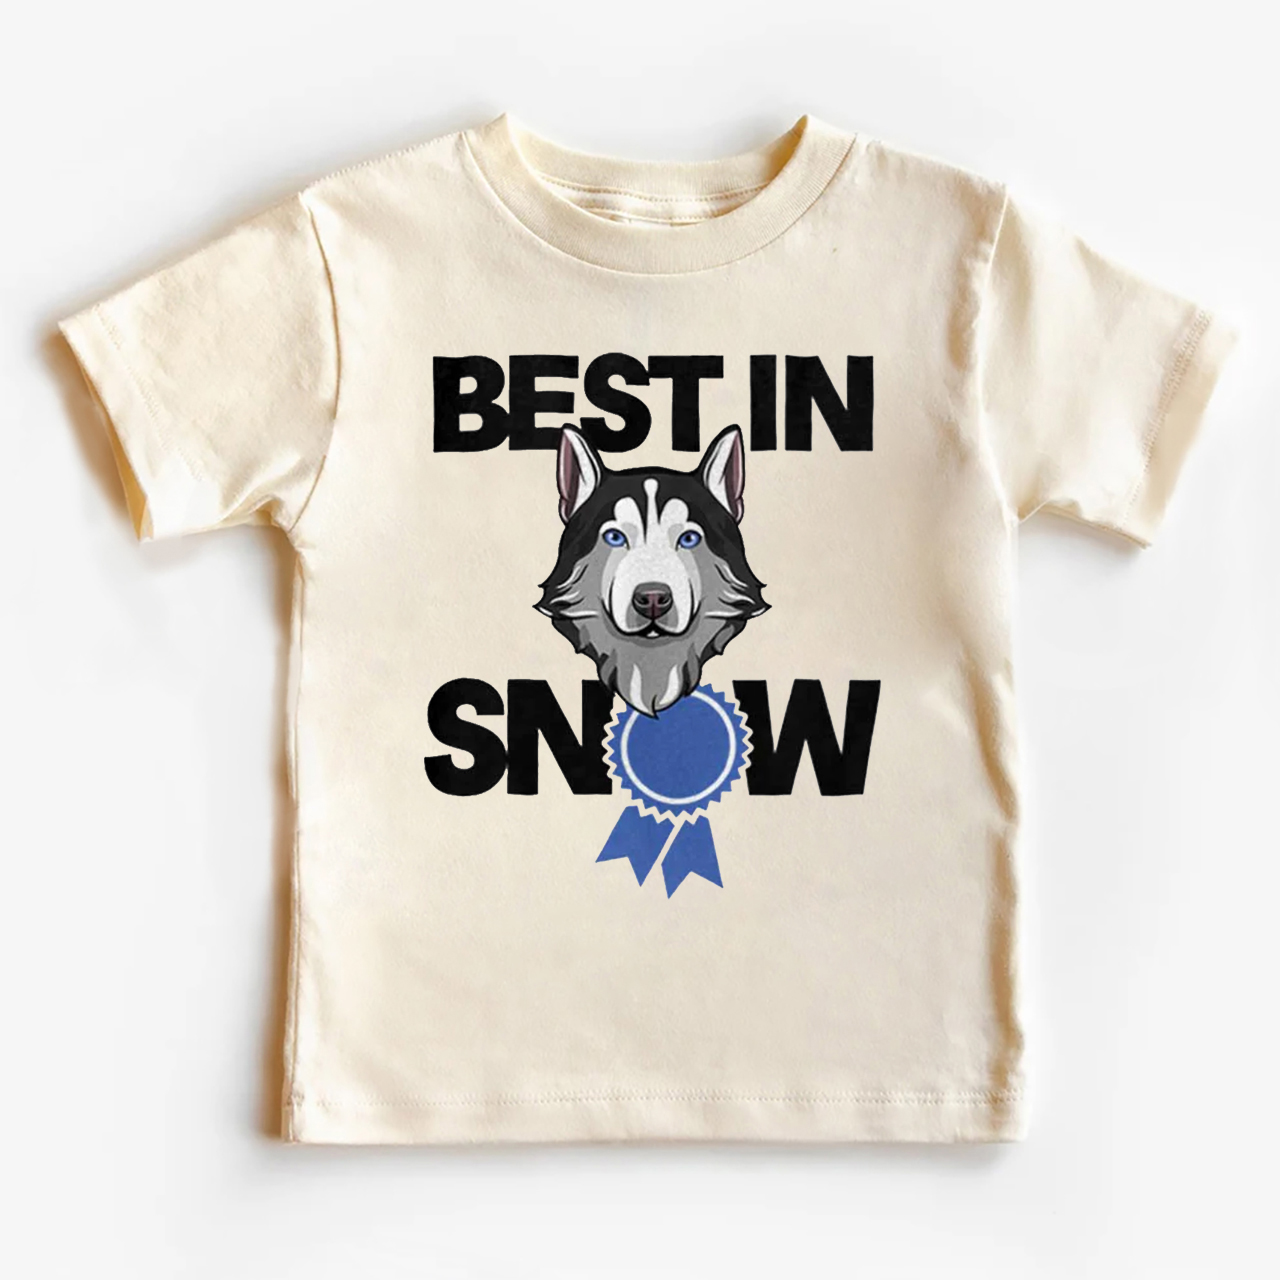 Snow Dog Kids Shirt